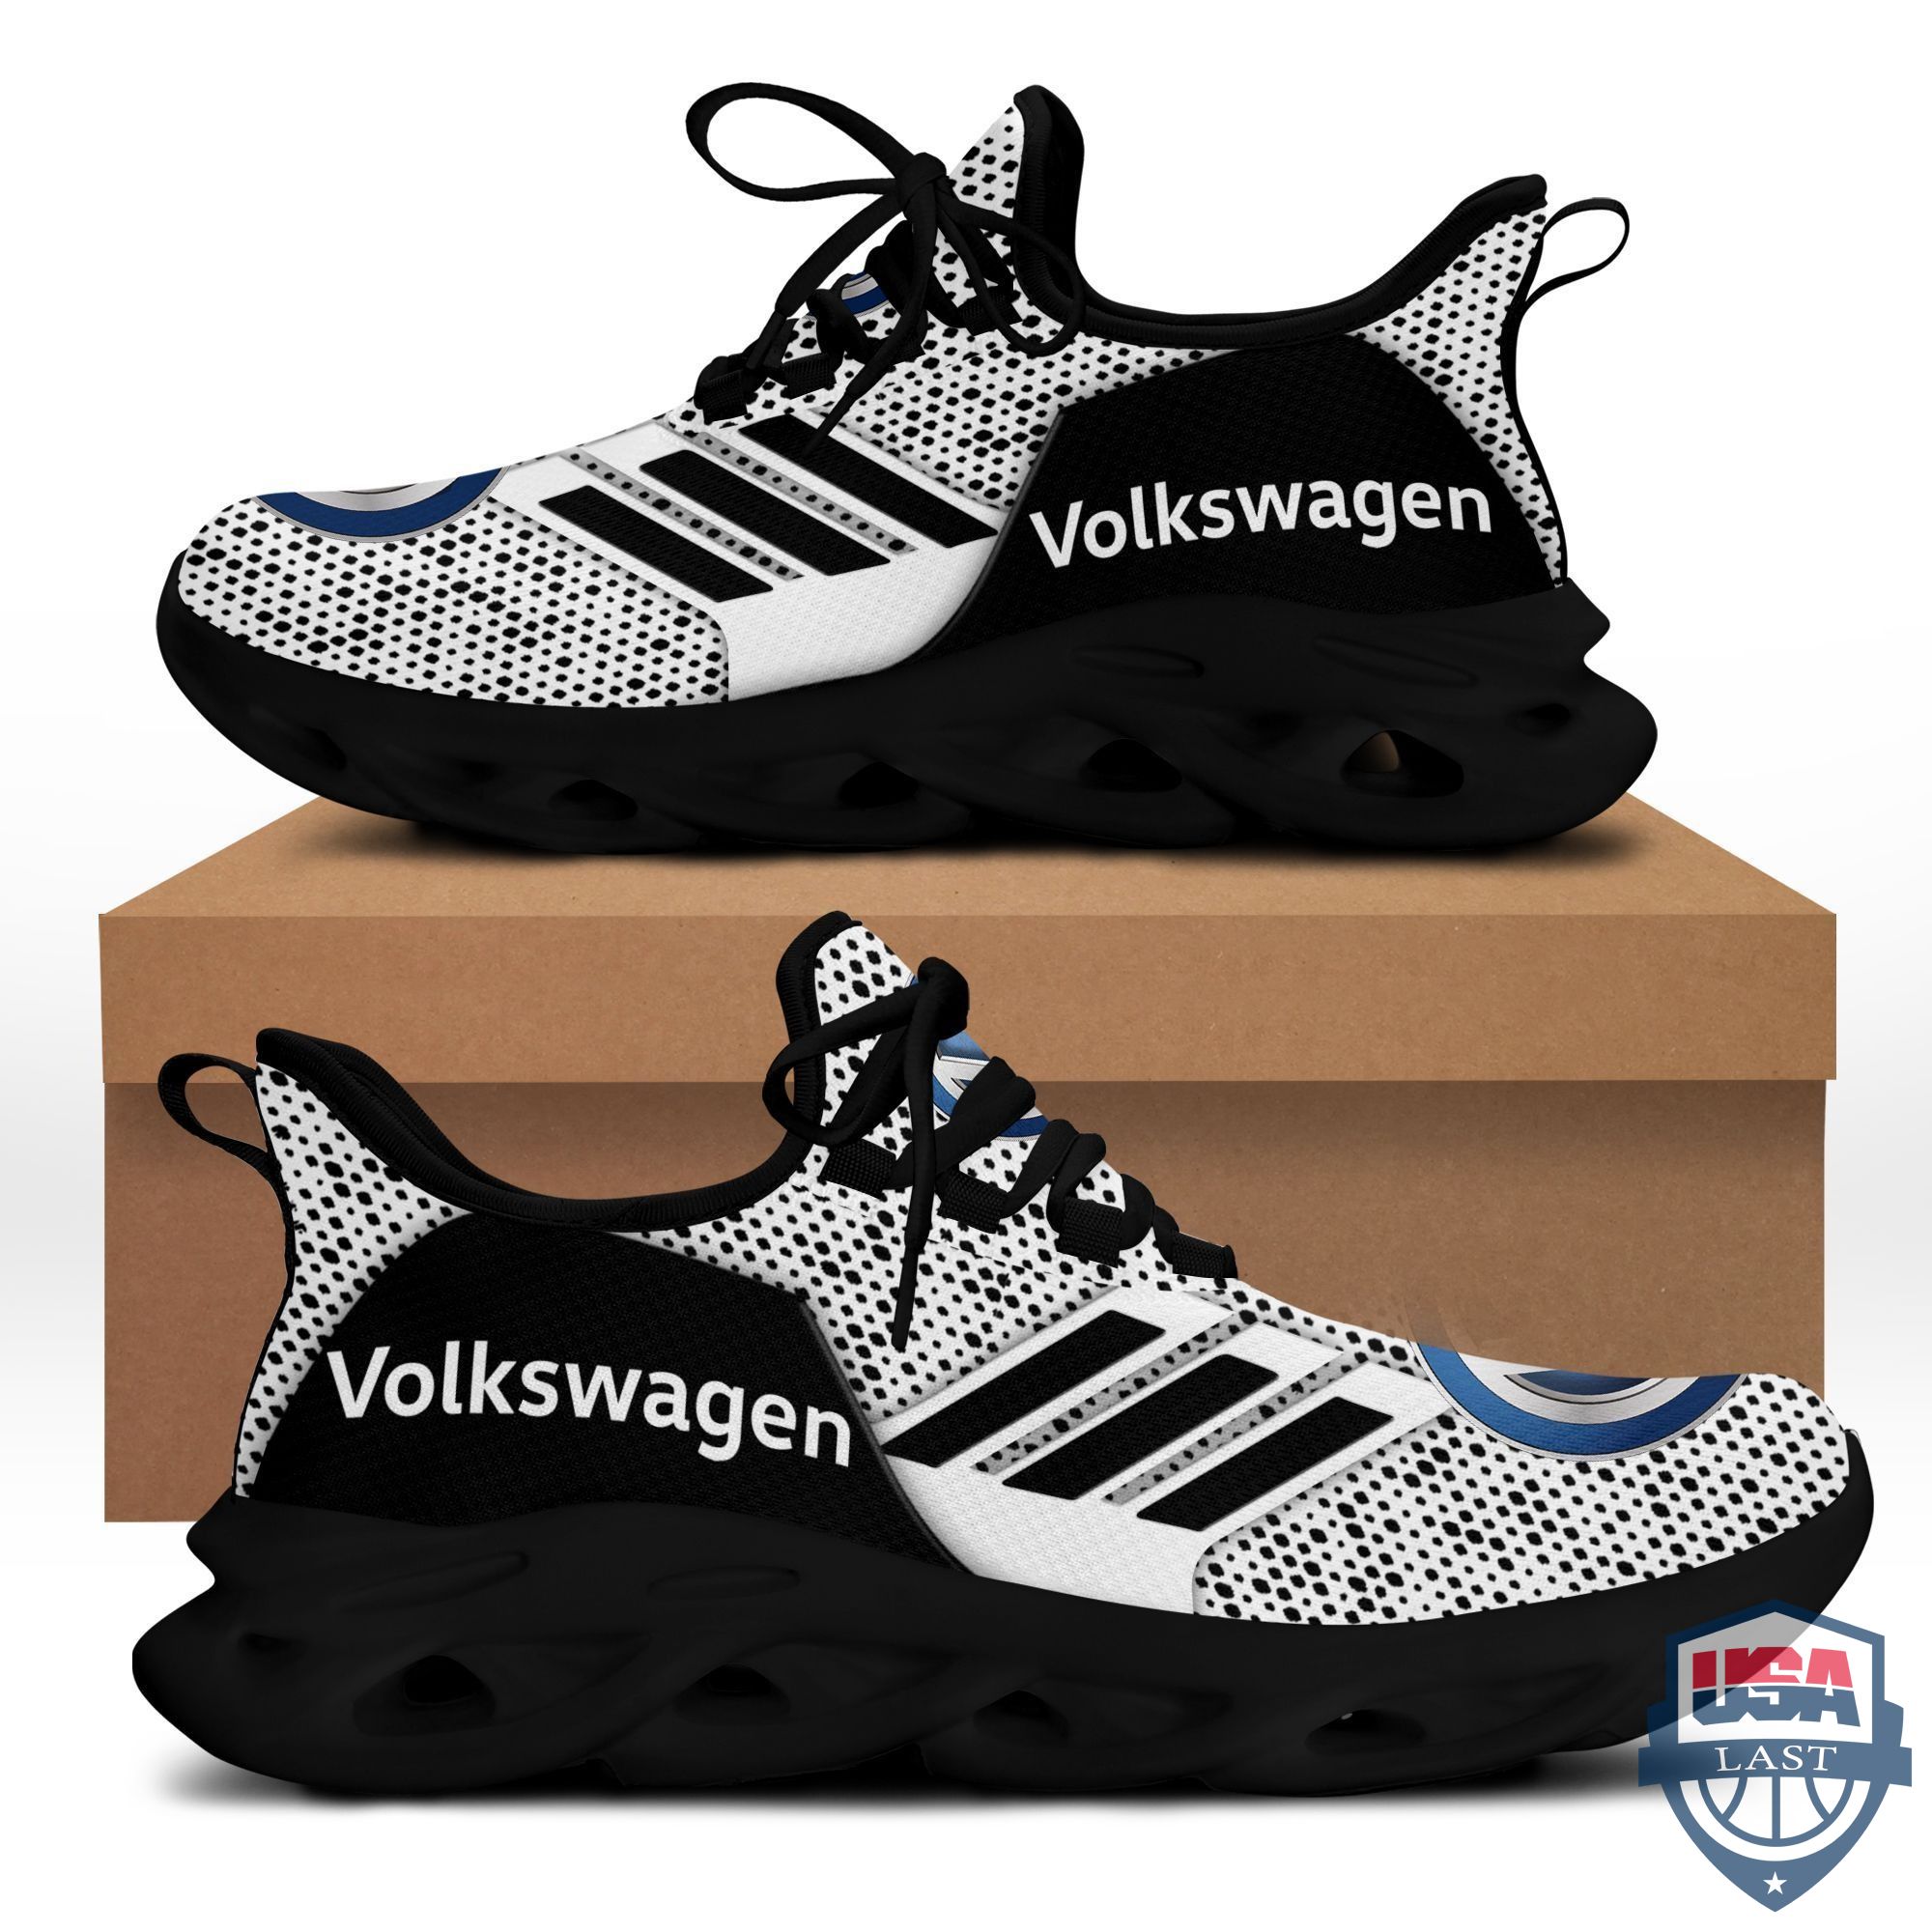 Volkswagen Sneaker Max Soul Shoes White Version